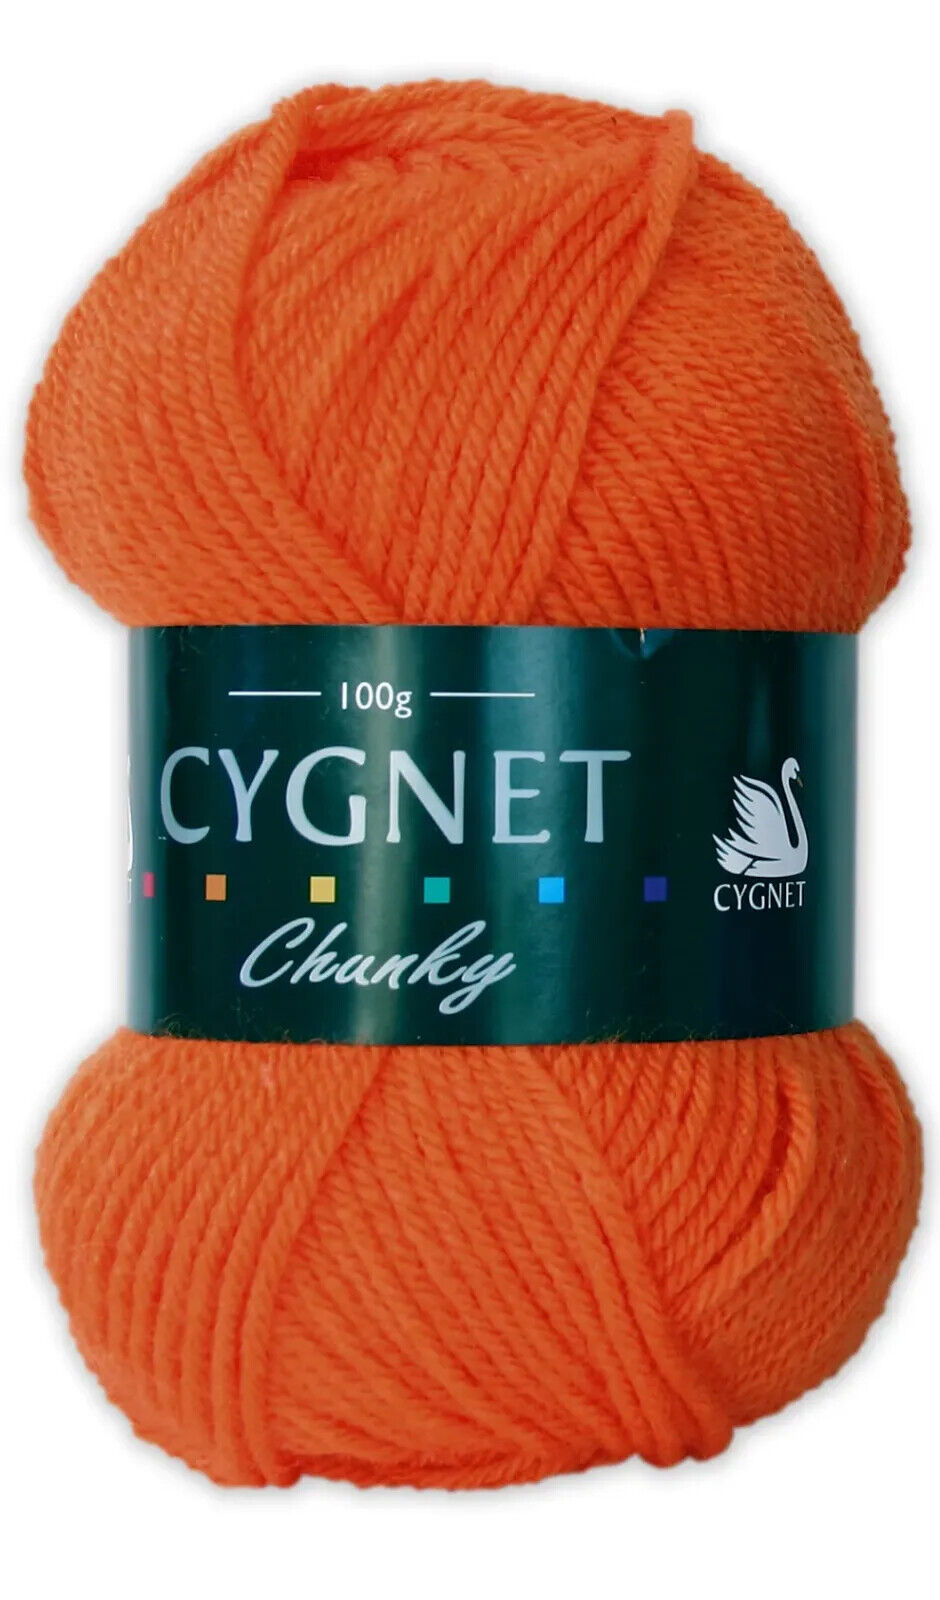 Cygnet CHUNKY Knitting Yarn / Wool - 100g Chunky Knit Ball - Orange